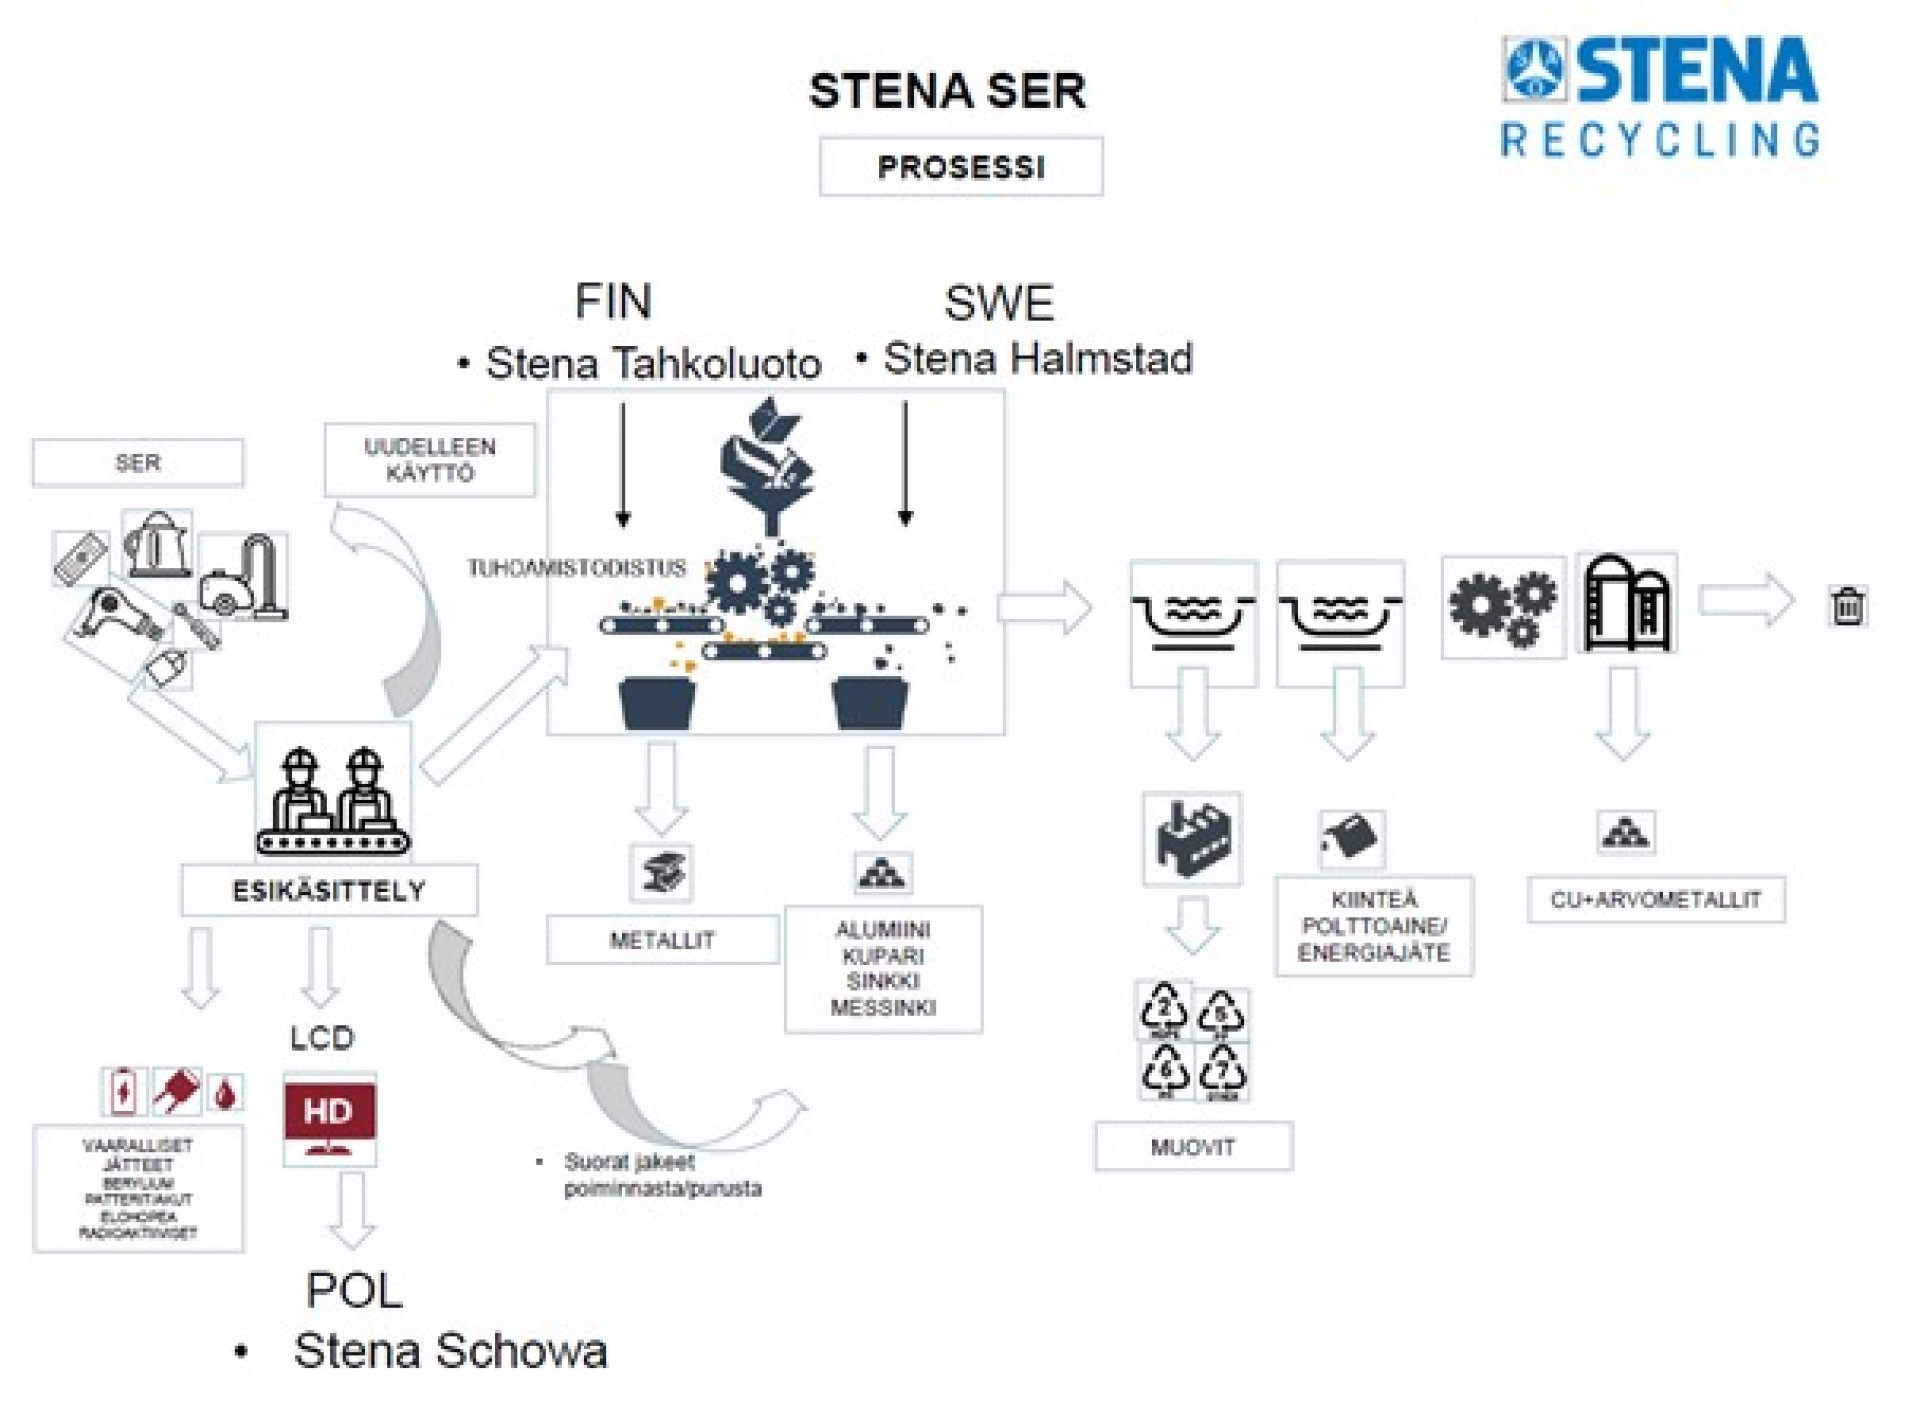 Stena Recycling prosessikuvaus.